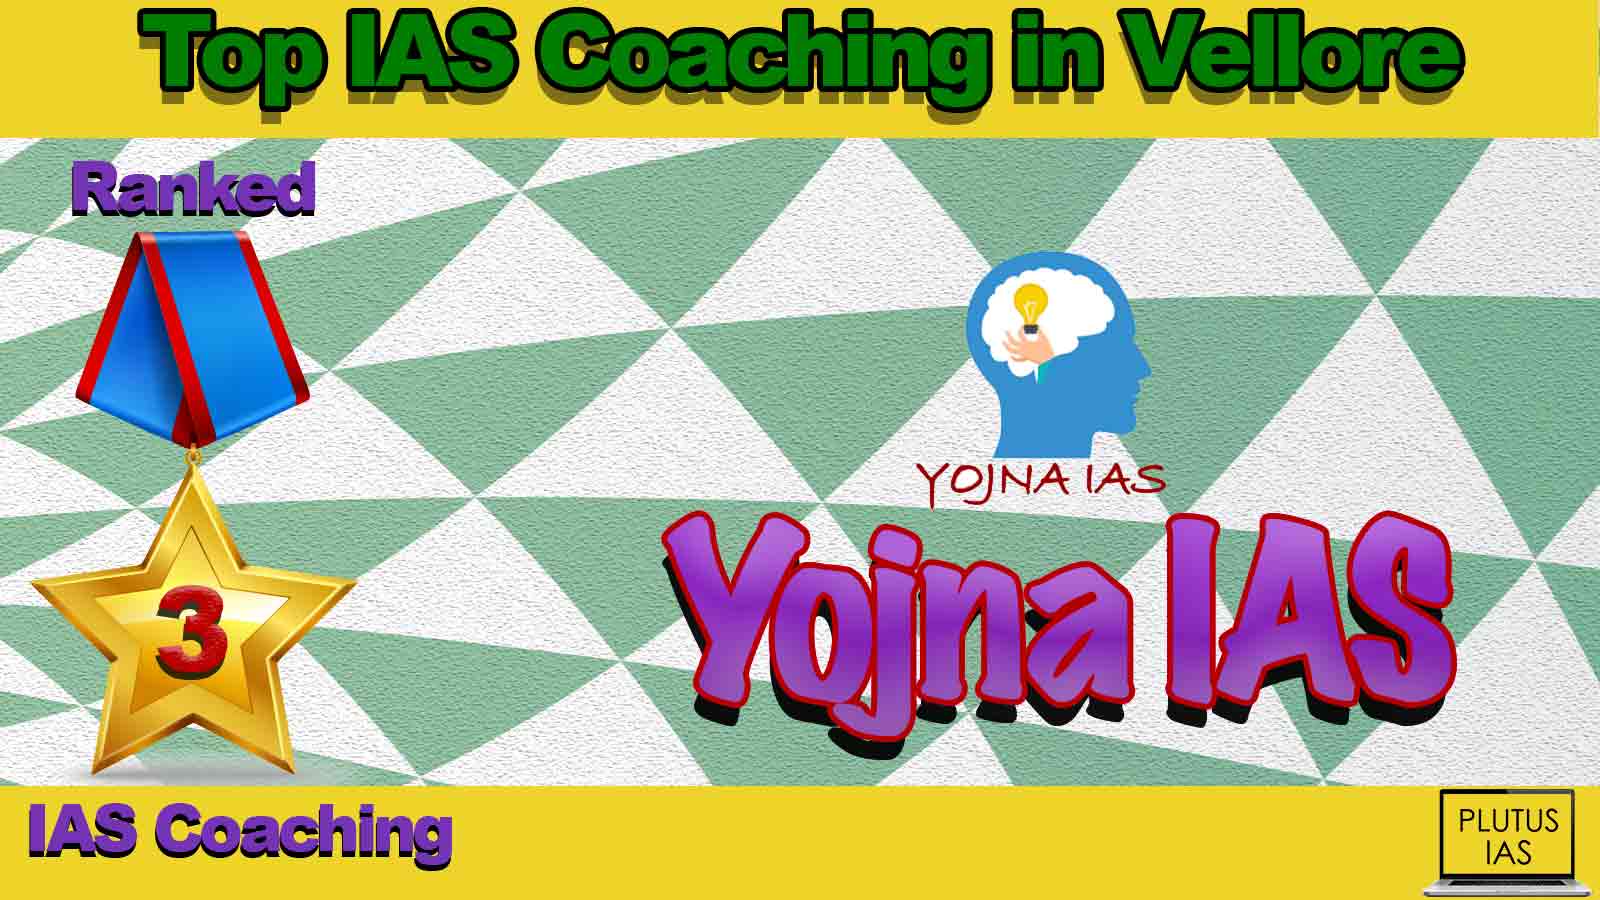 Best IAS Coaching in Vellore